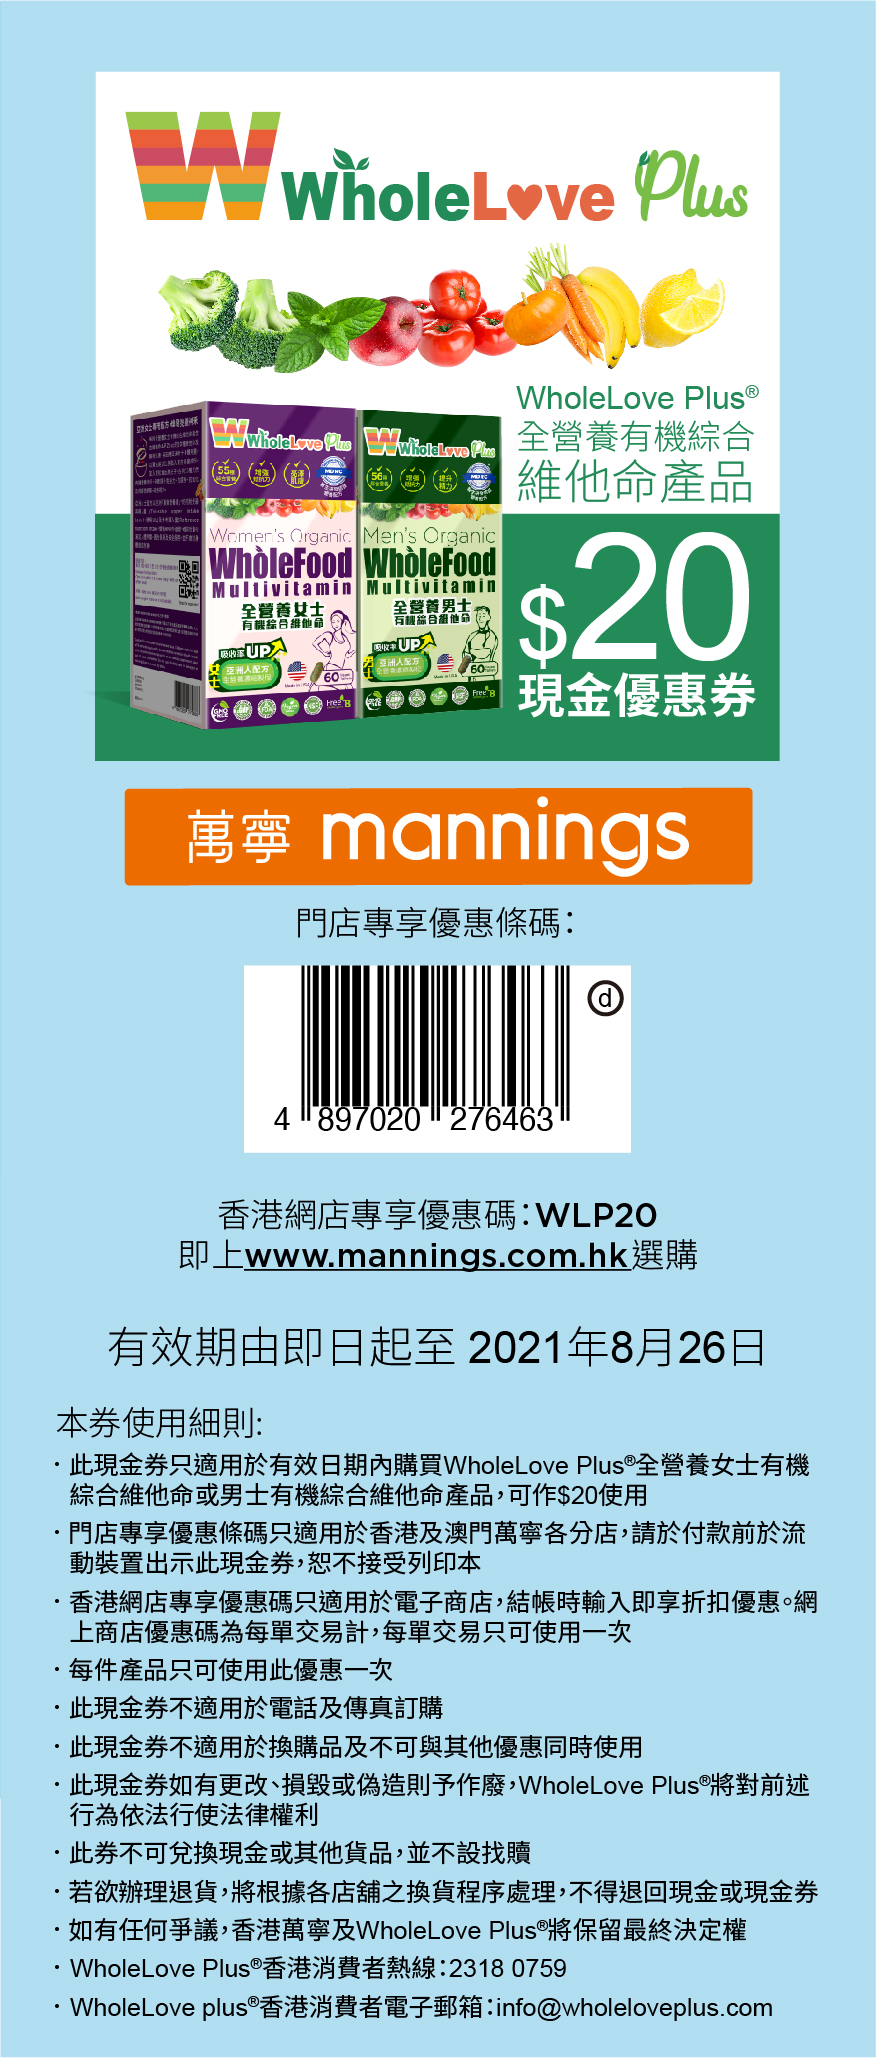 mannings WL Digital Coupon2021-06-01